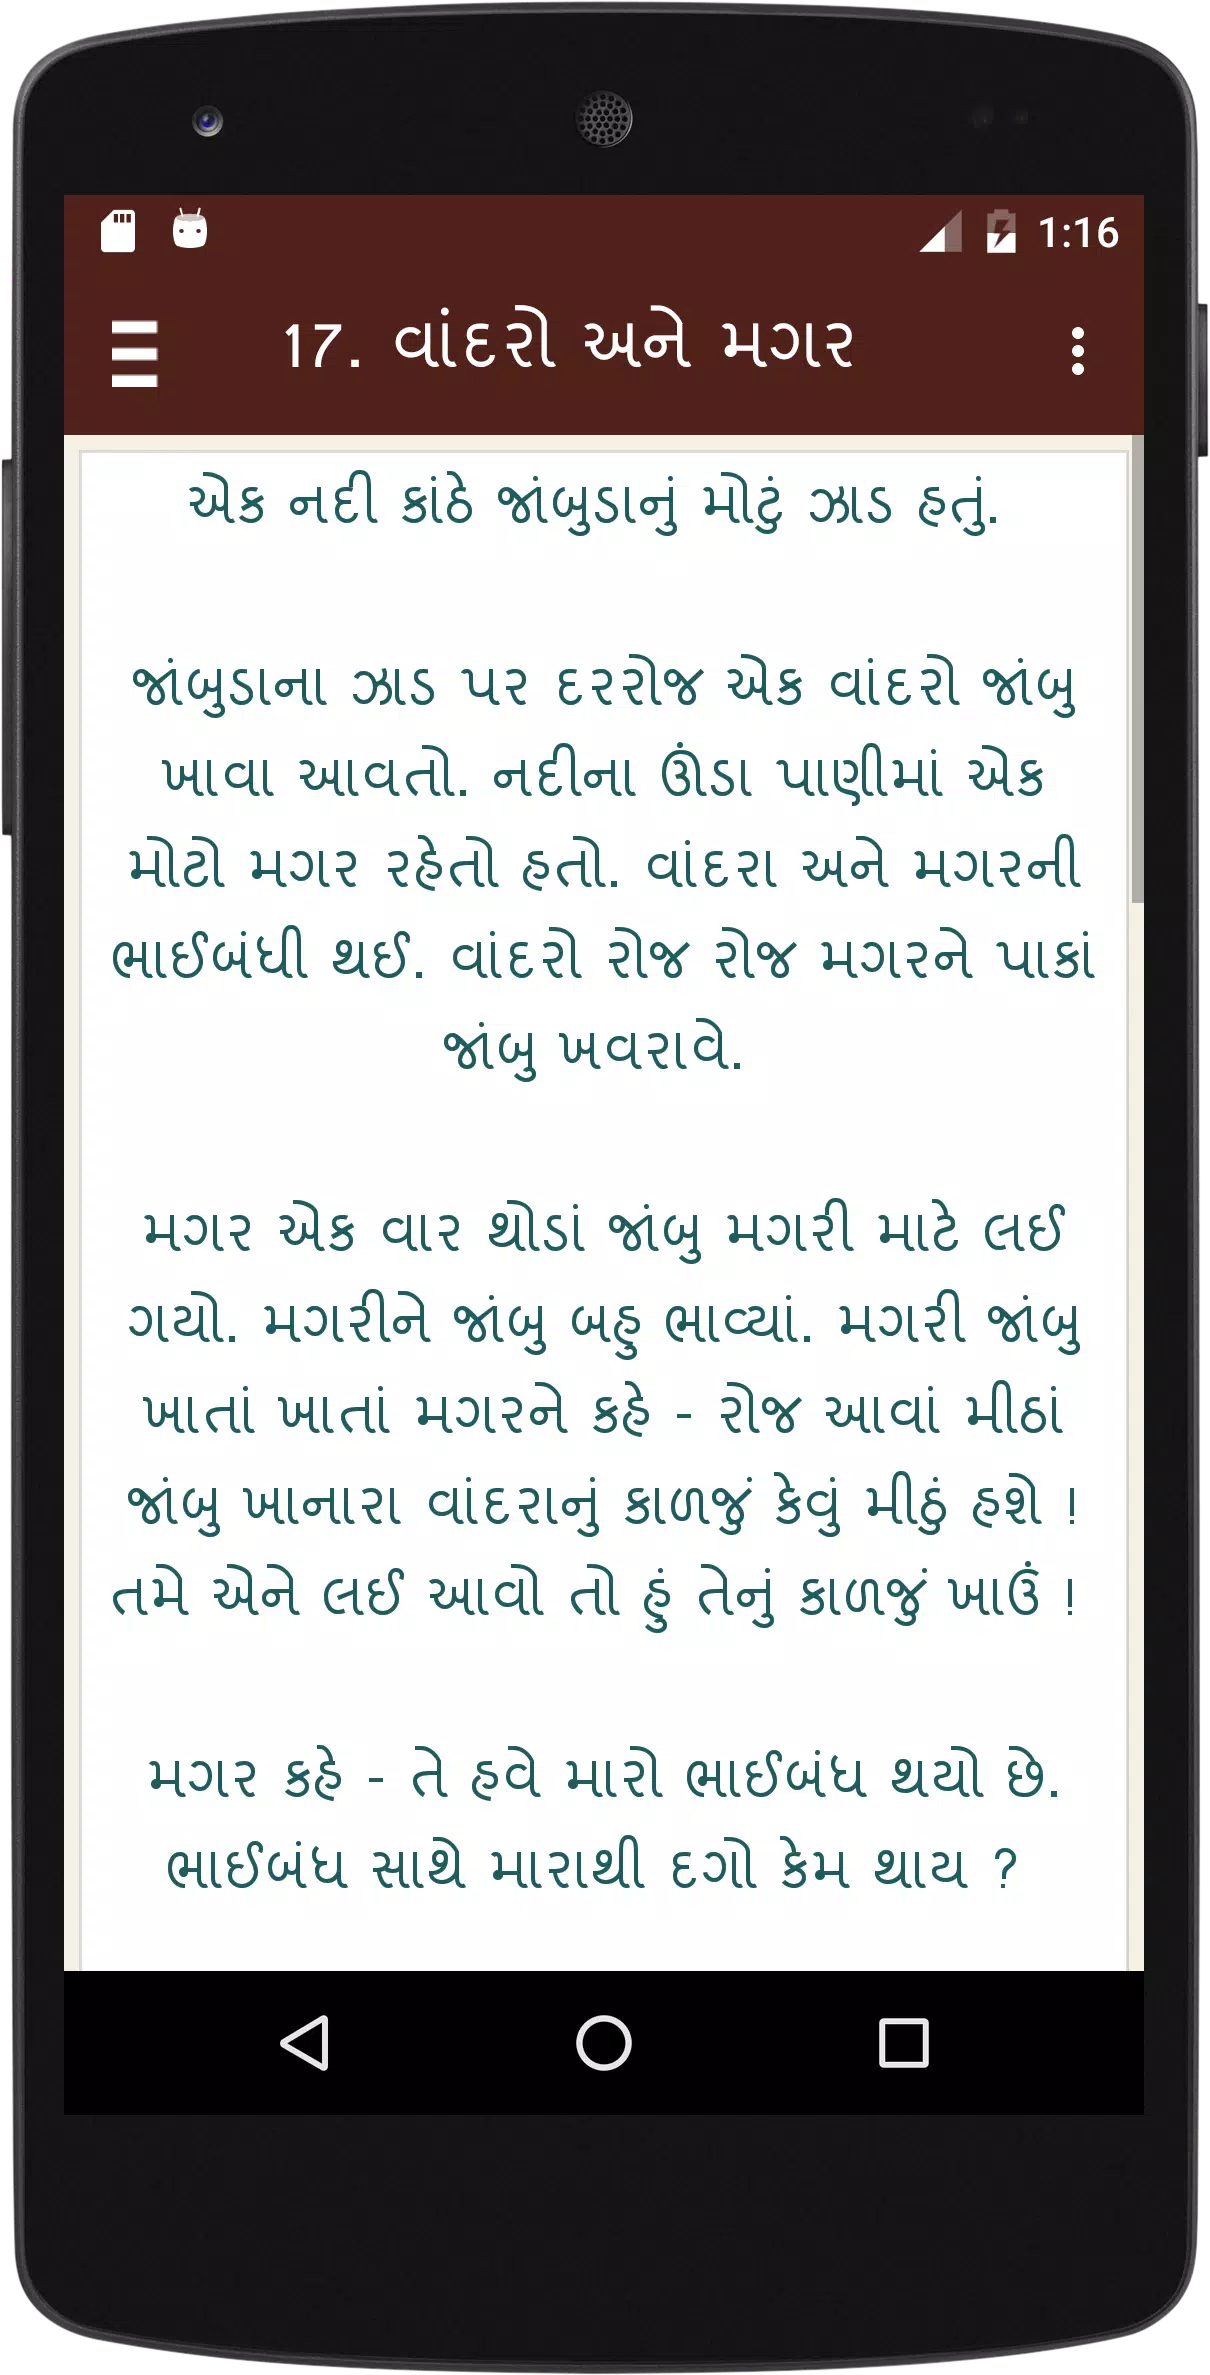 Скачать Bal Varta (Gujarati) APK для Android